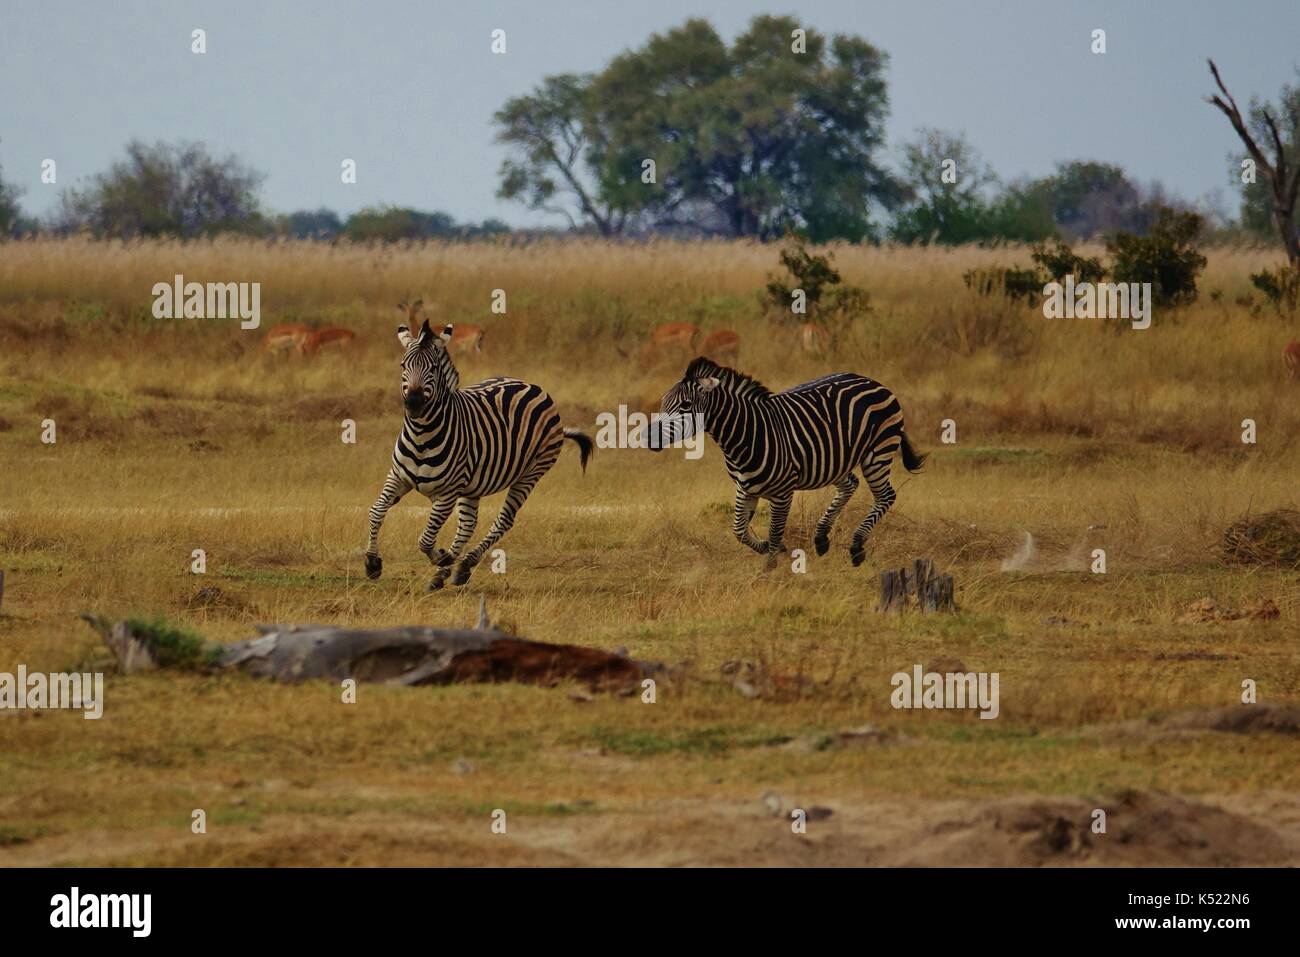 Two Zebras fighting Stock Photo